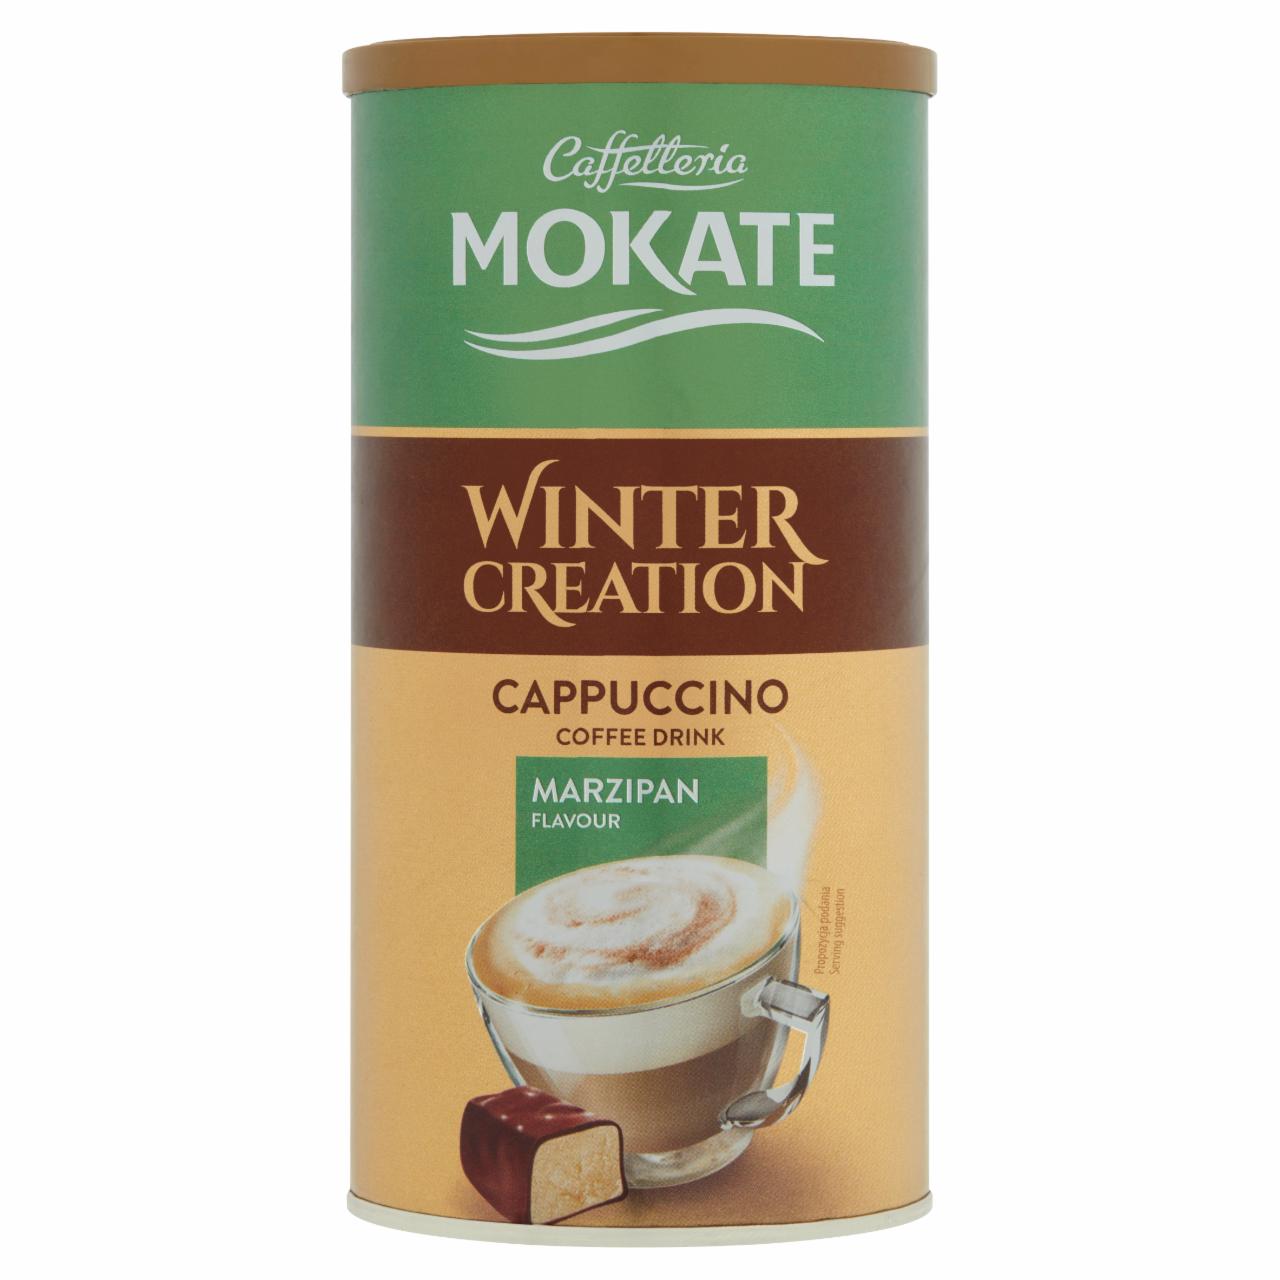 Képek - Mokate Winter Creation Cappuccino marcipán ízű kávéitalpor 150 g